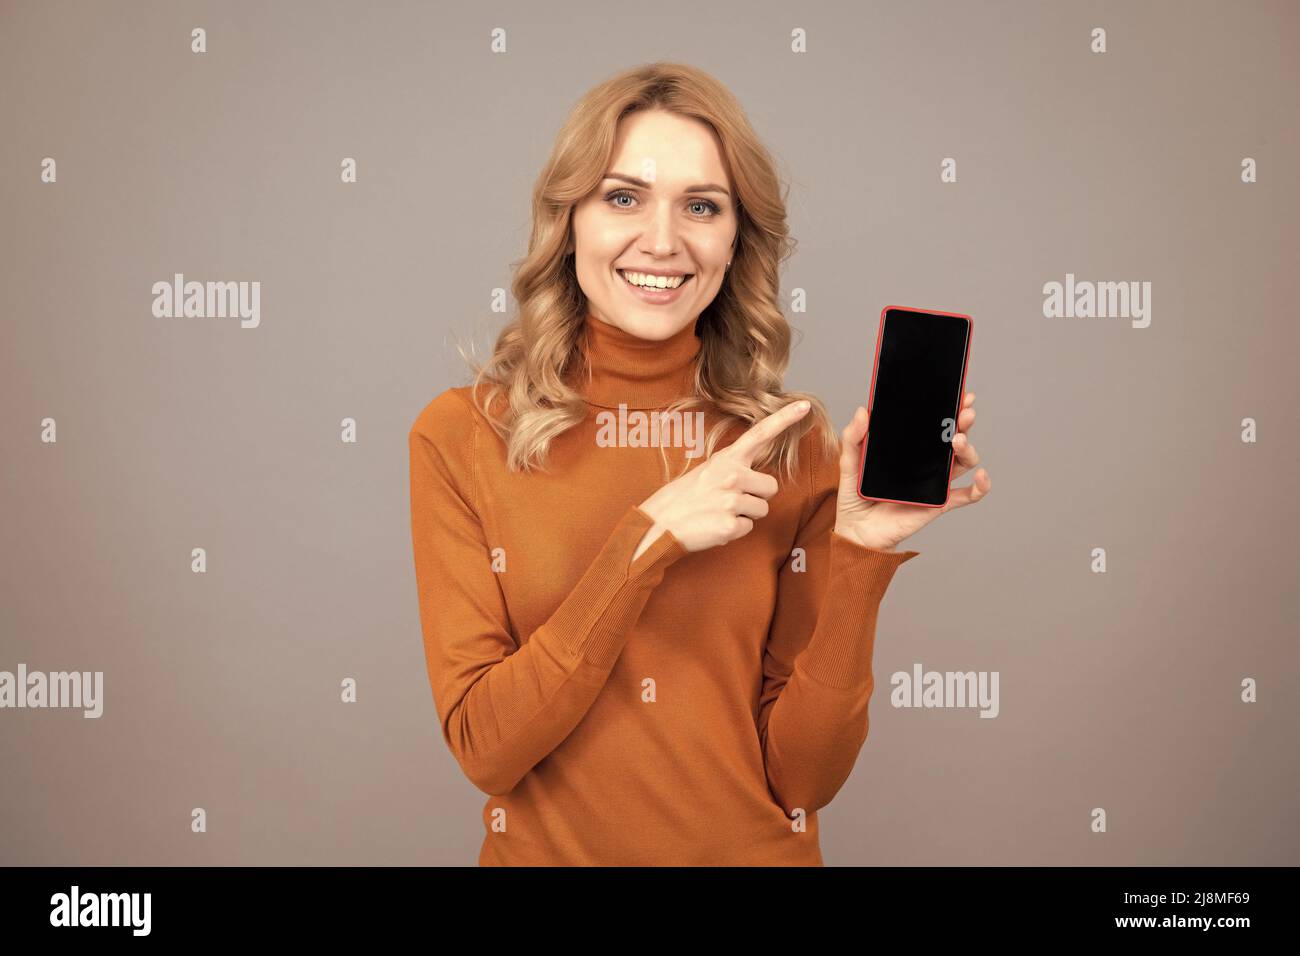 Mobile werbung werbung werbung -Fotos und -Bildmaterial in hoher Auflösung  – Alamy